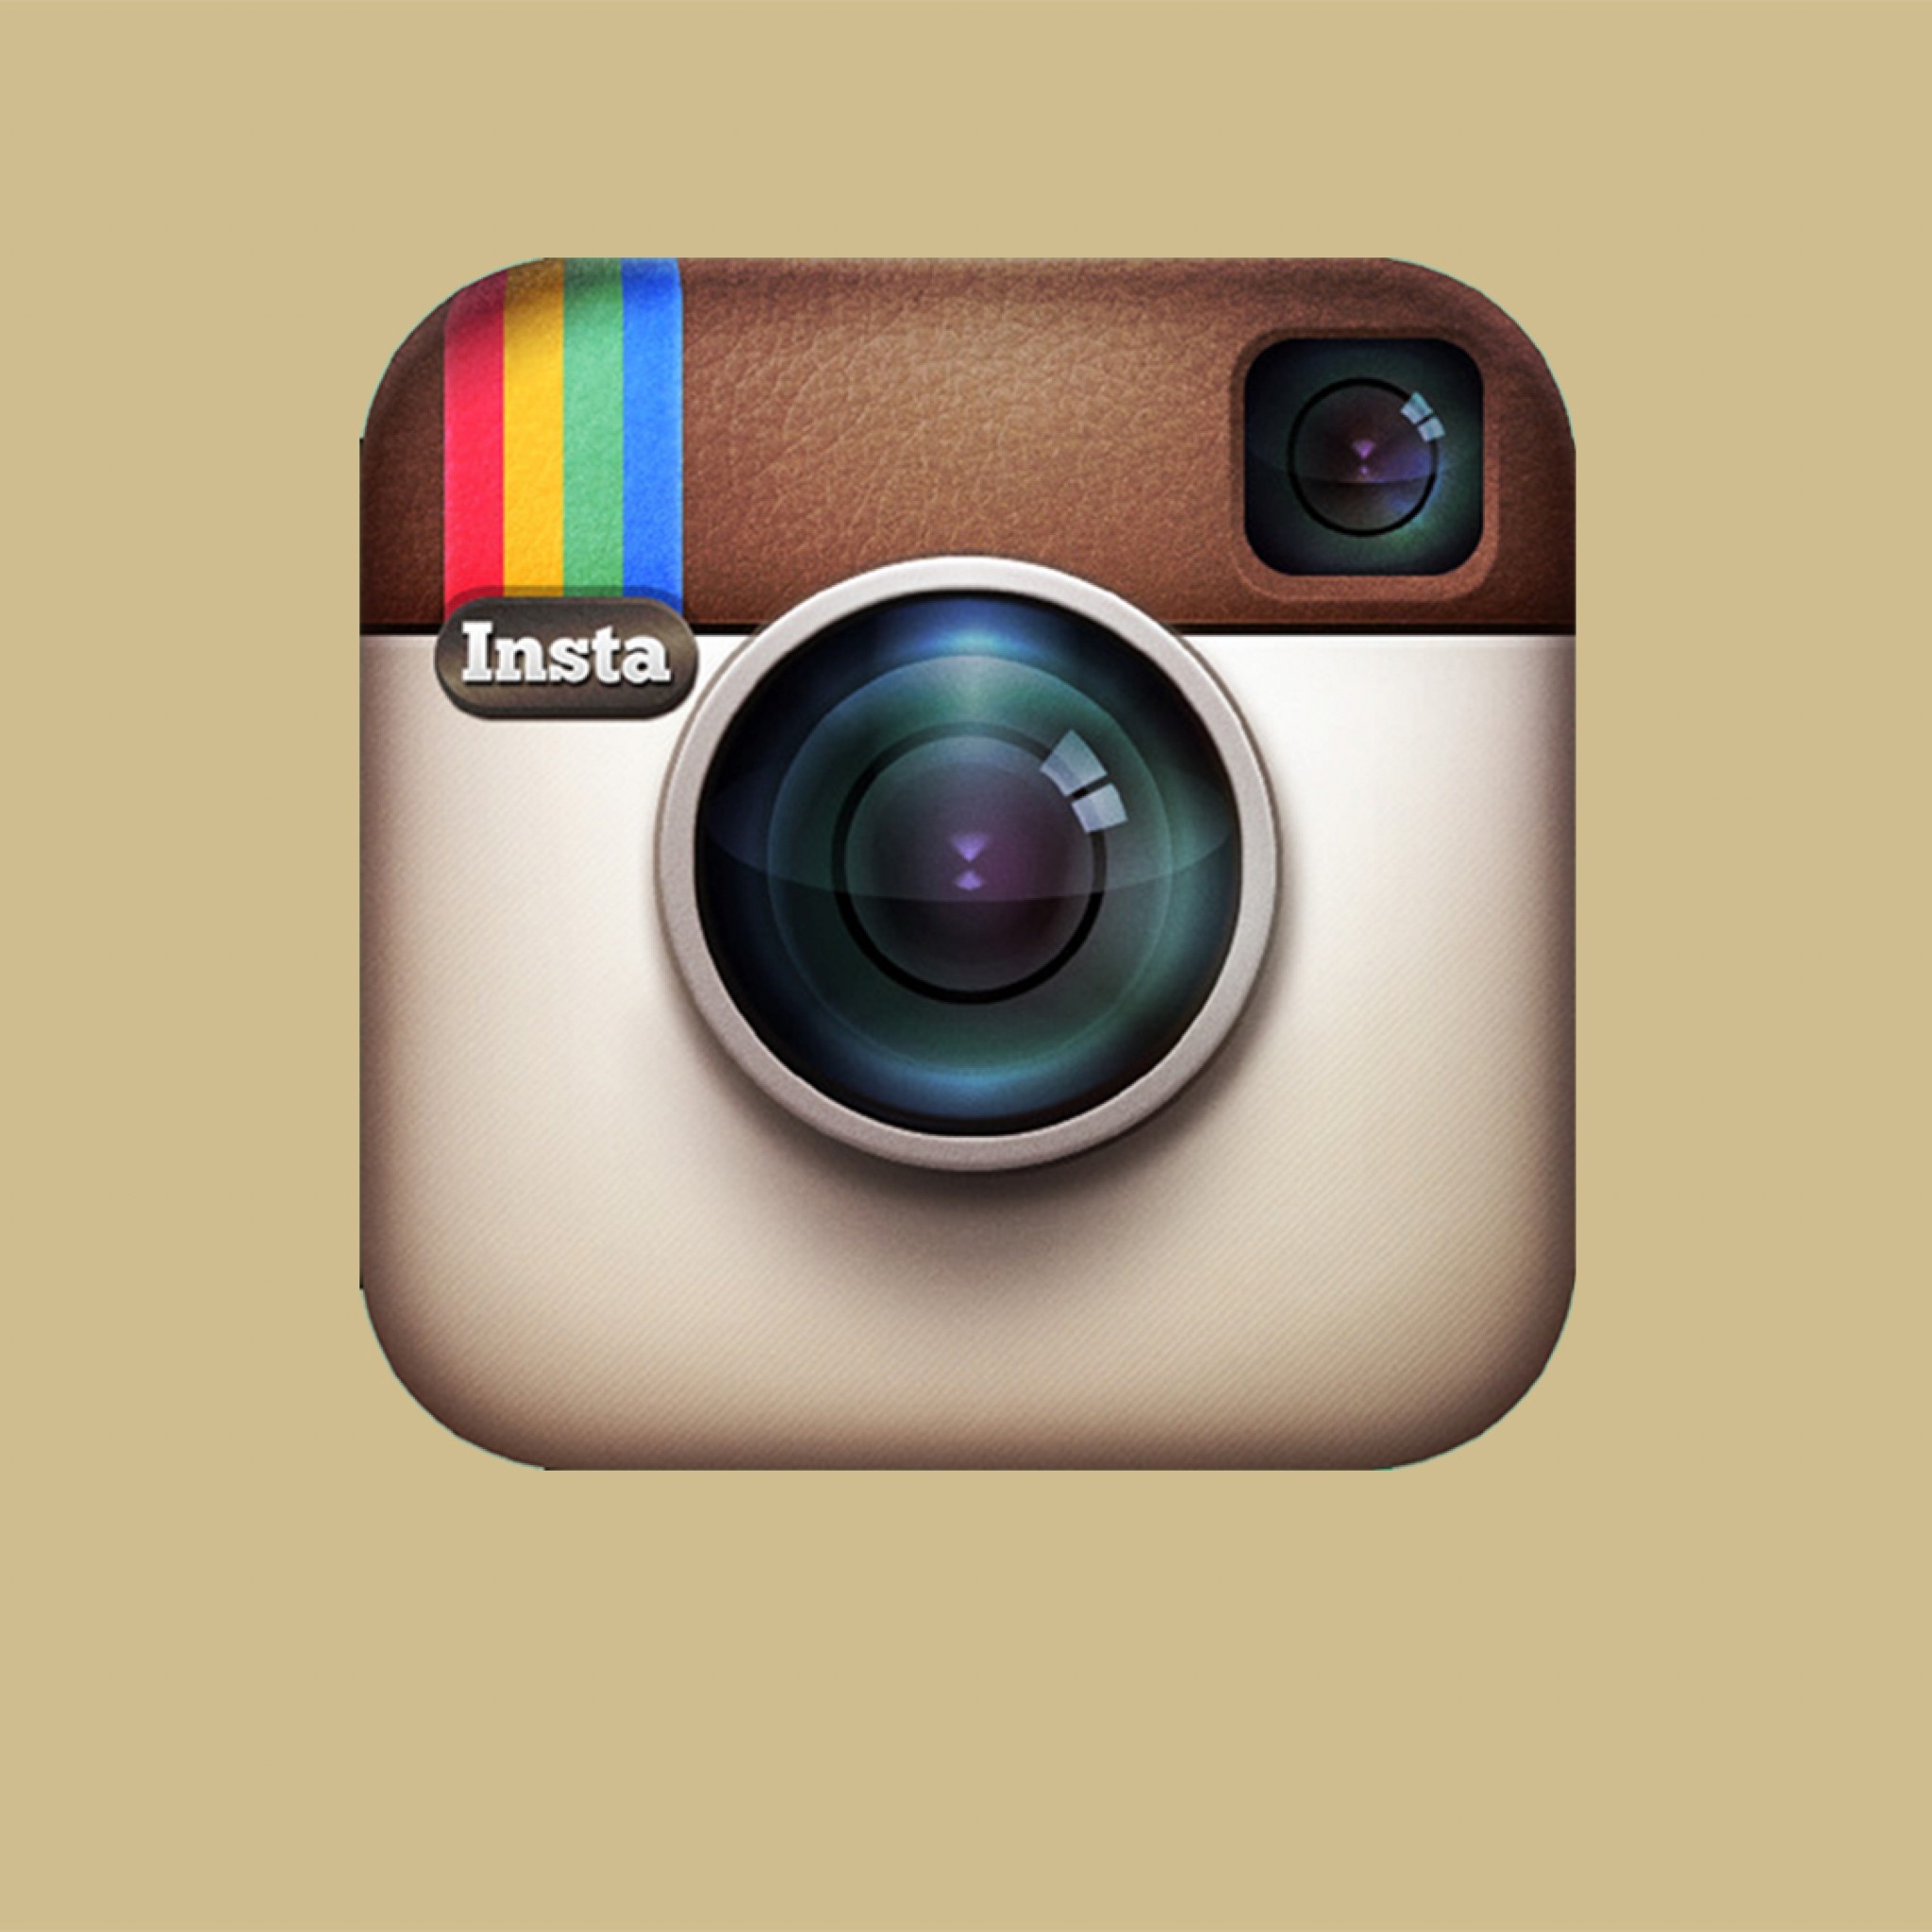 Instagram pictures